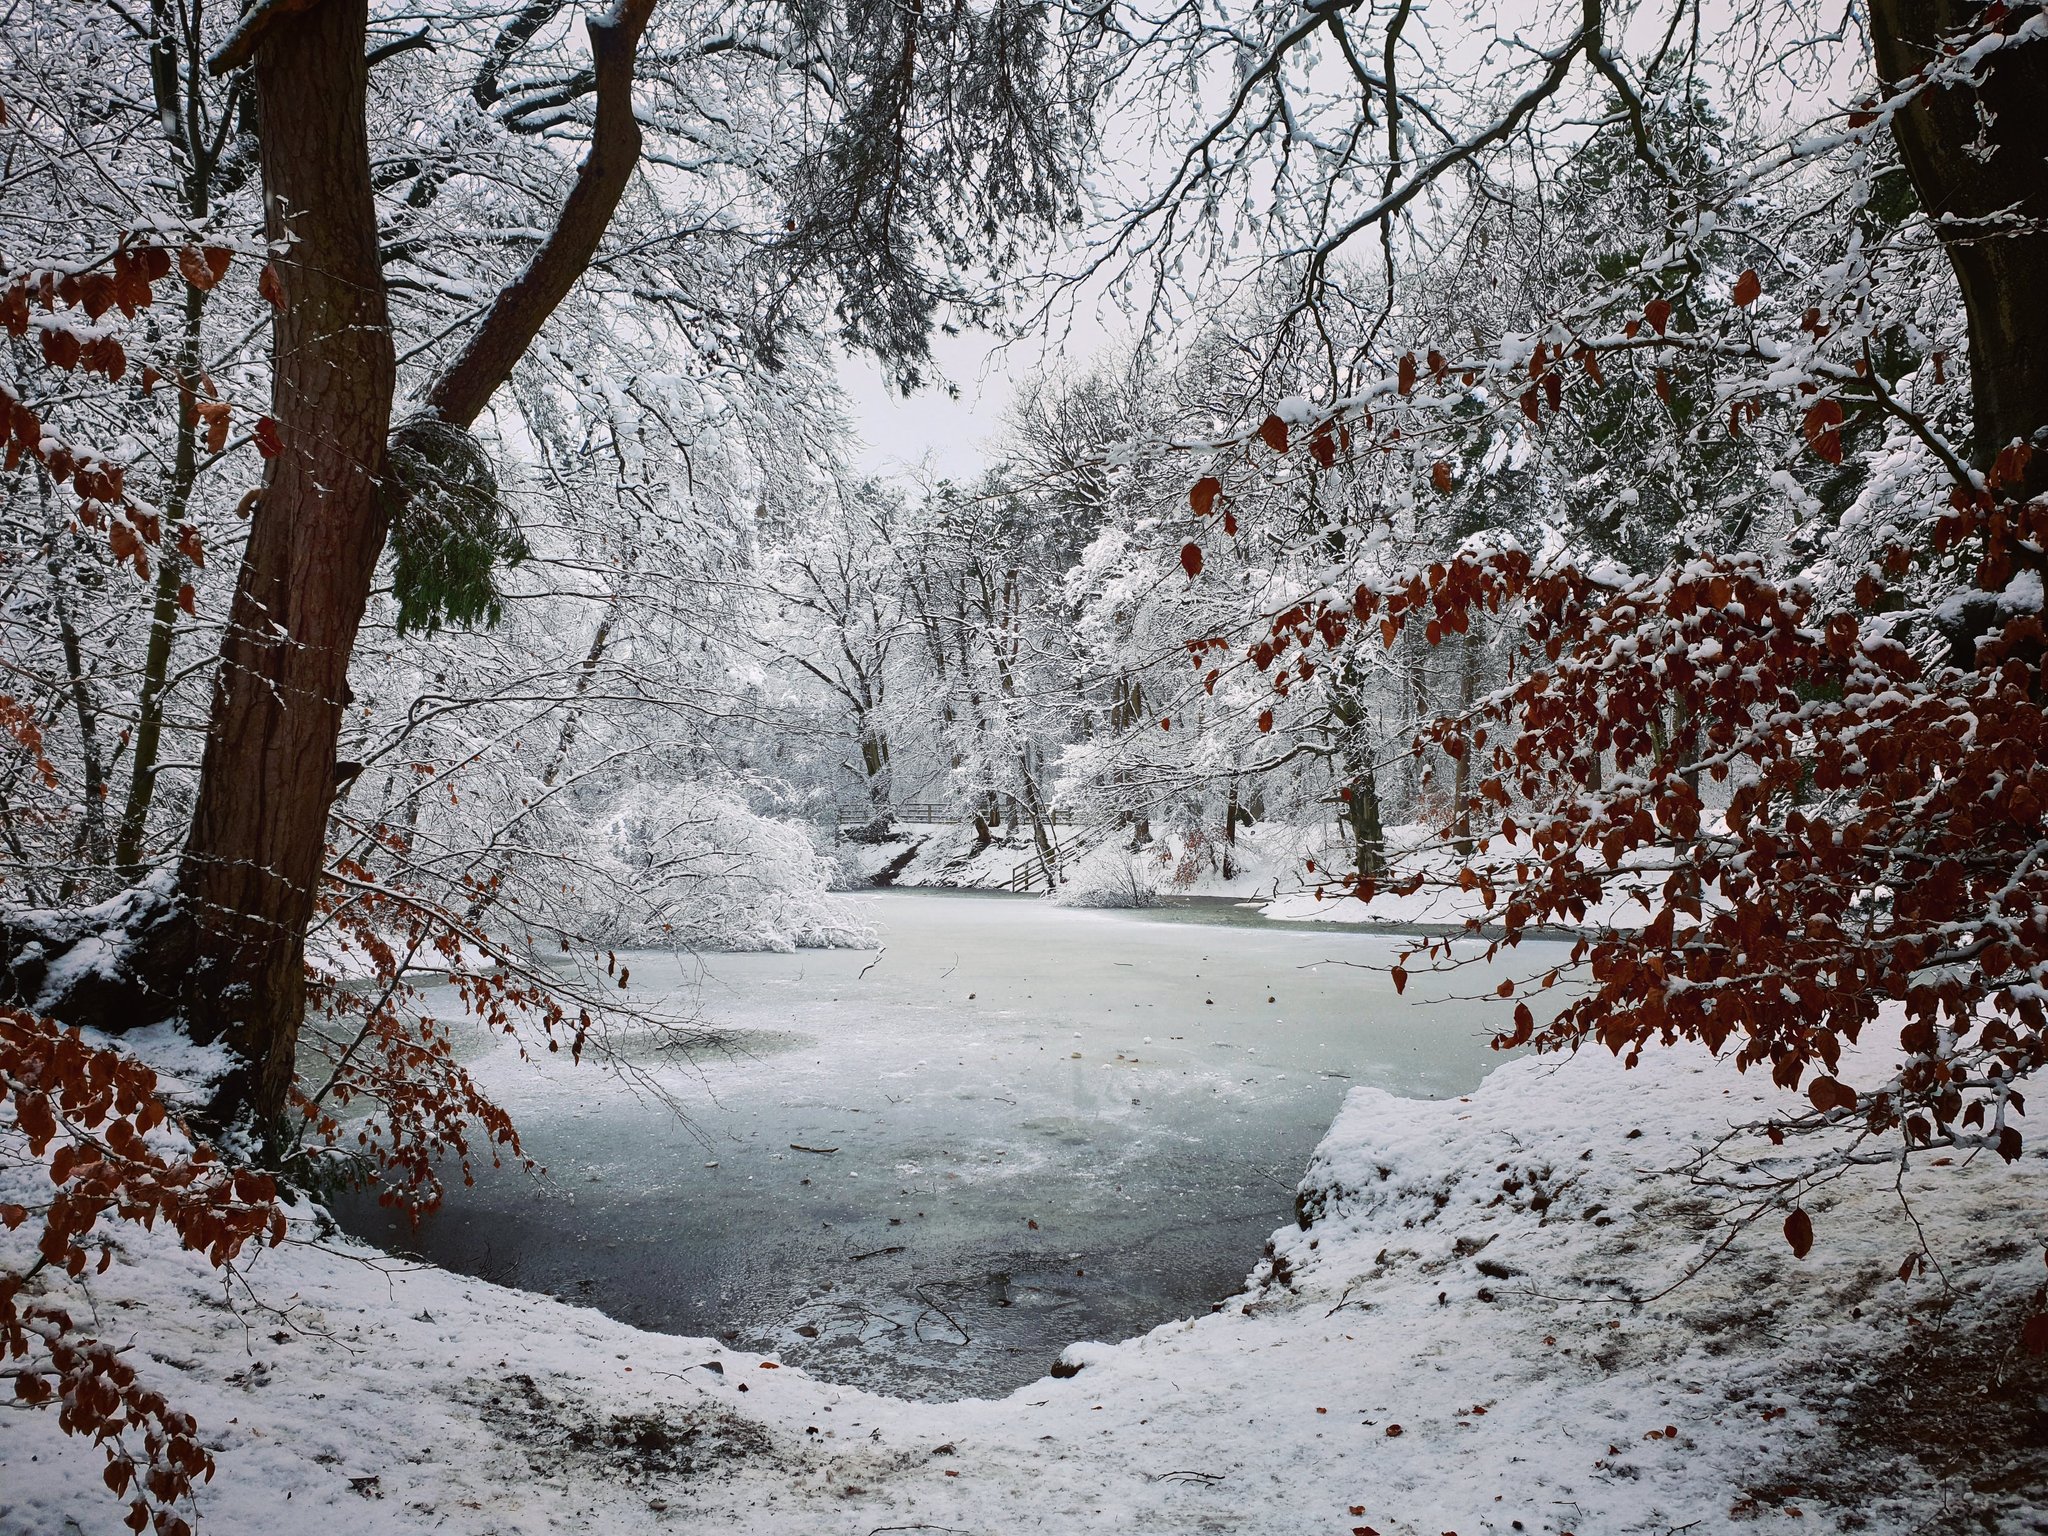 3rd Place ‘Harvey's Place: Snow Day’ - Hookstone Woods, Harrogate by Rachel Auty @marketerach